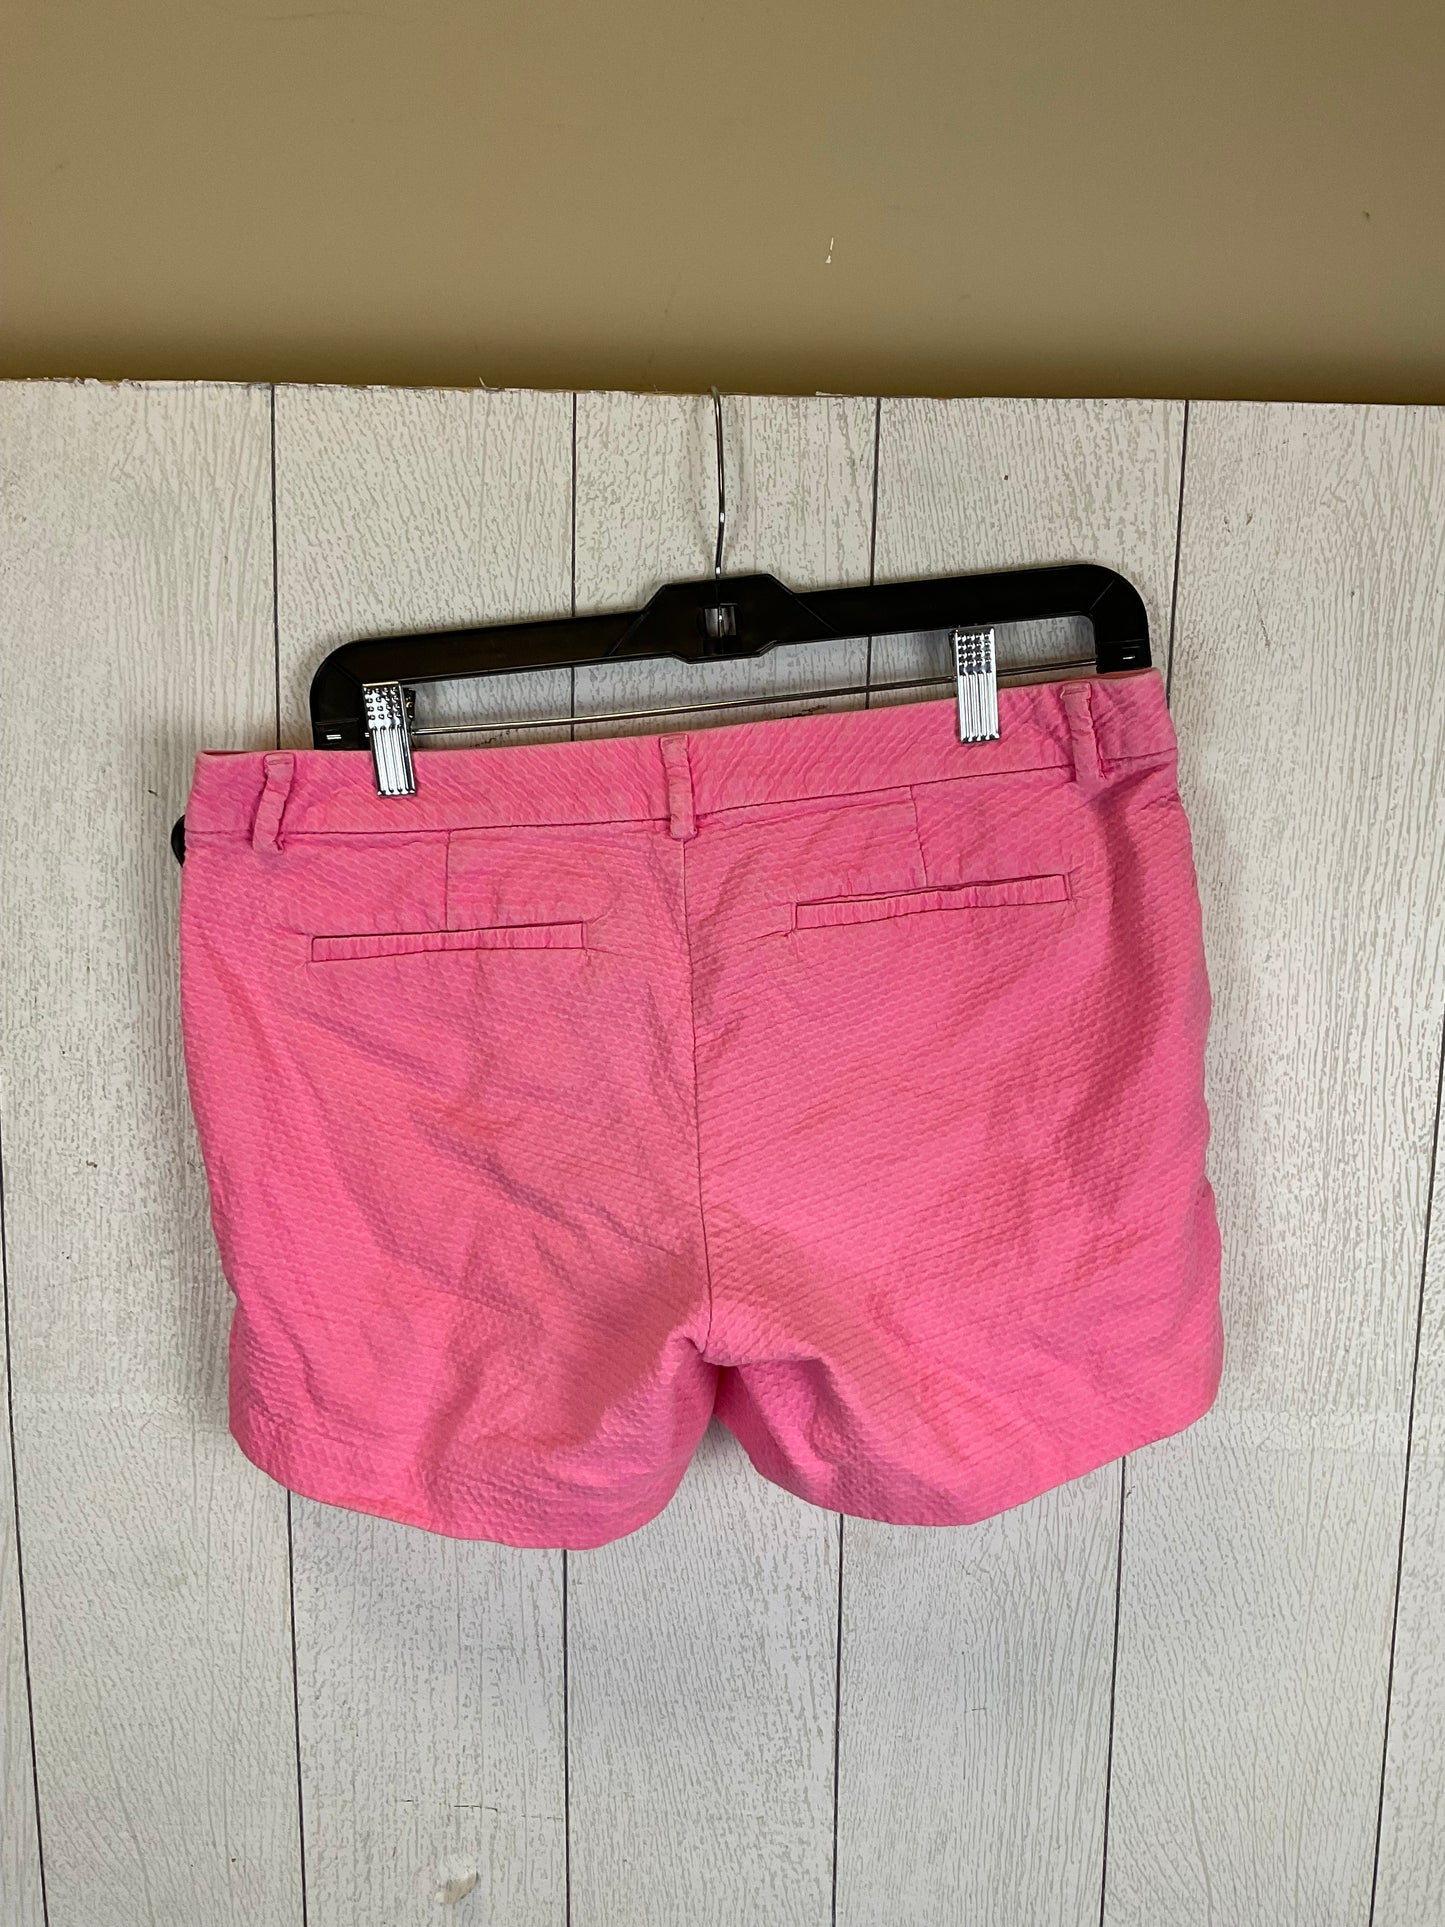 Pink Shorts Designer Lilly Pulitzer, Size 6